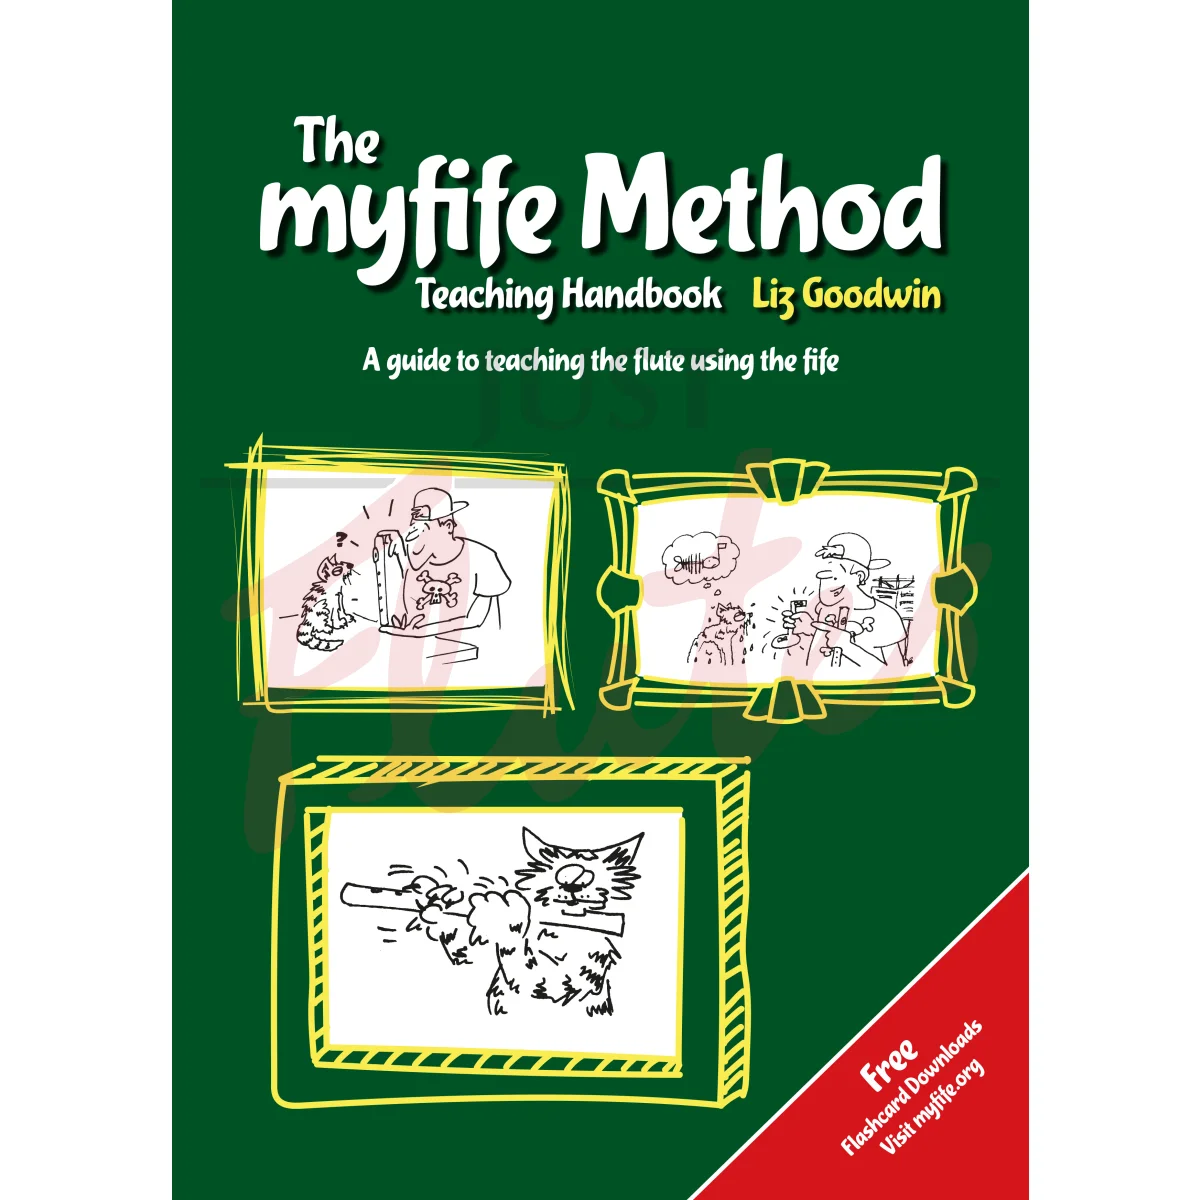 The myfife Method - Teaching Handbook